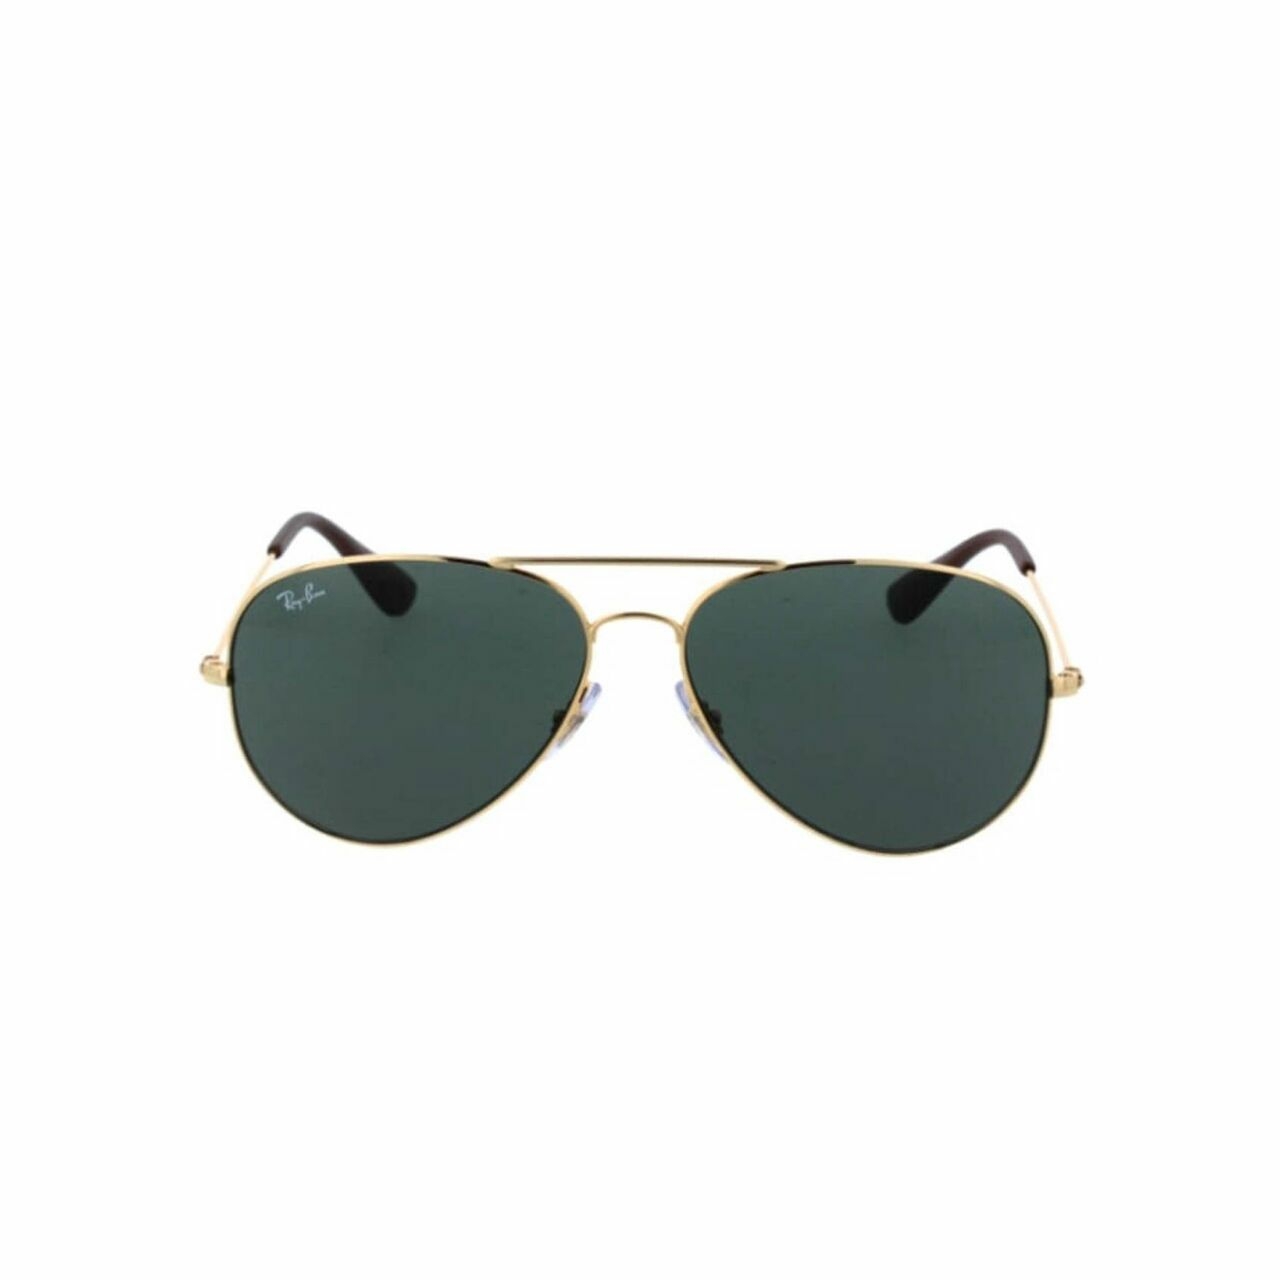 Ray-ban 0rb3558 Arista Dark Green Sunglasses